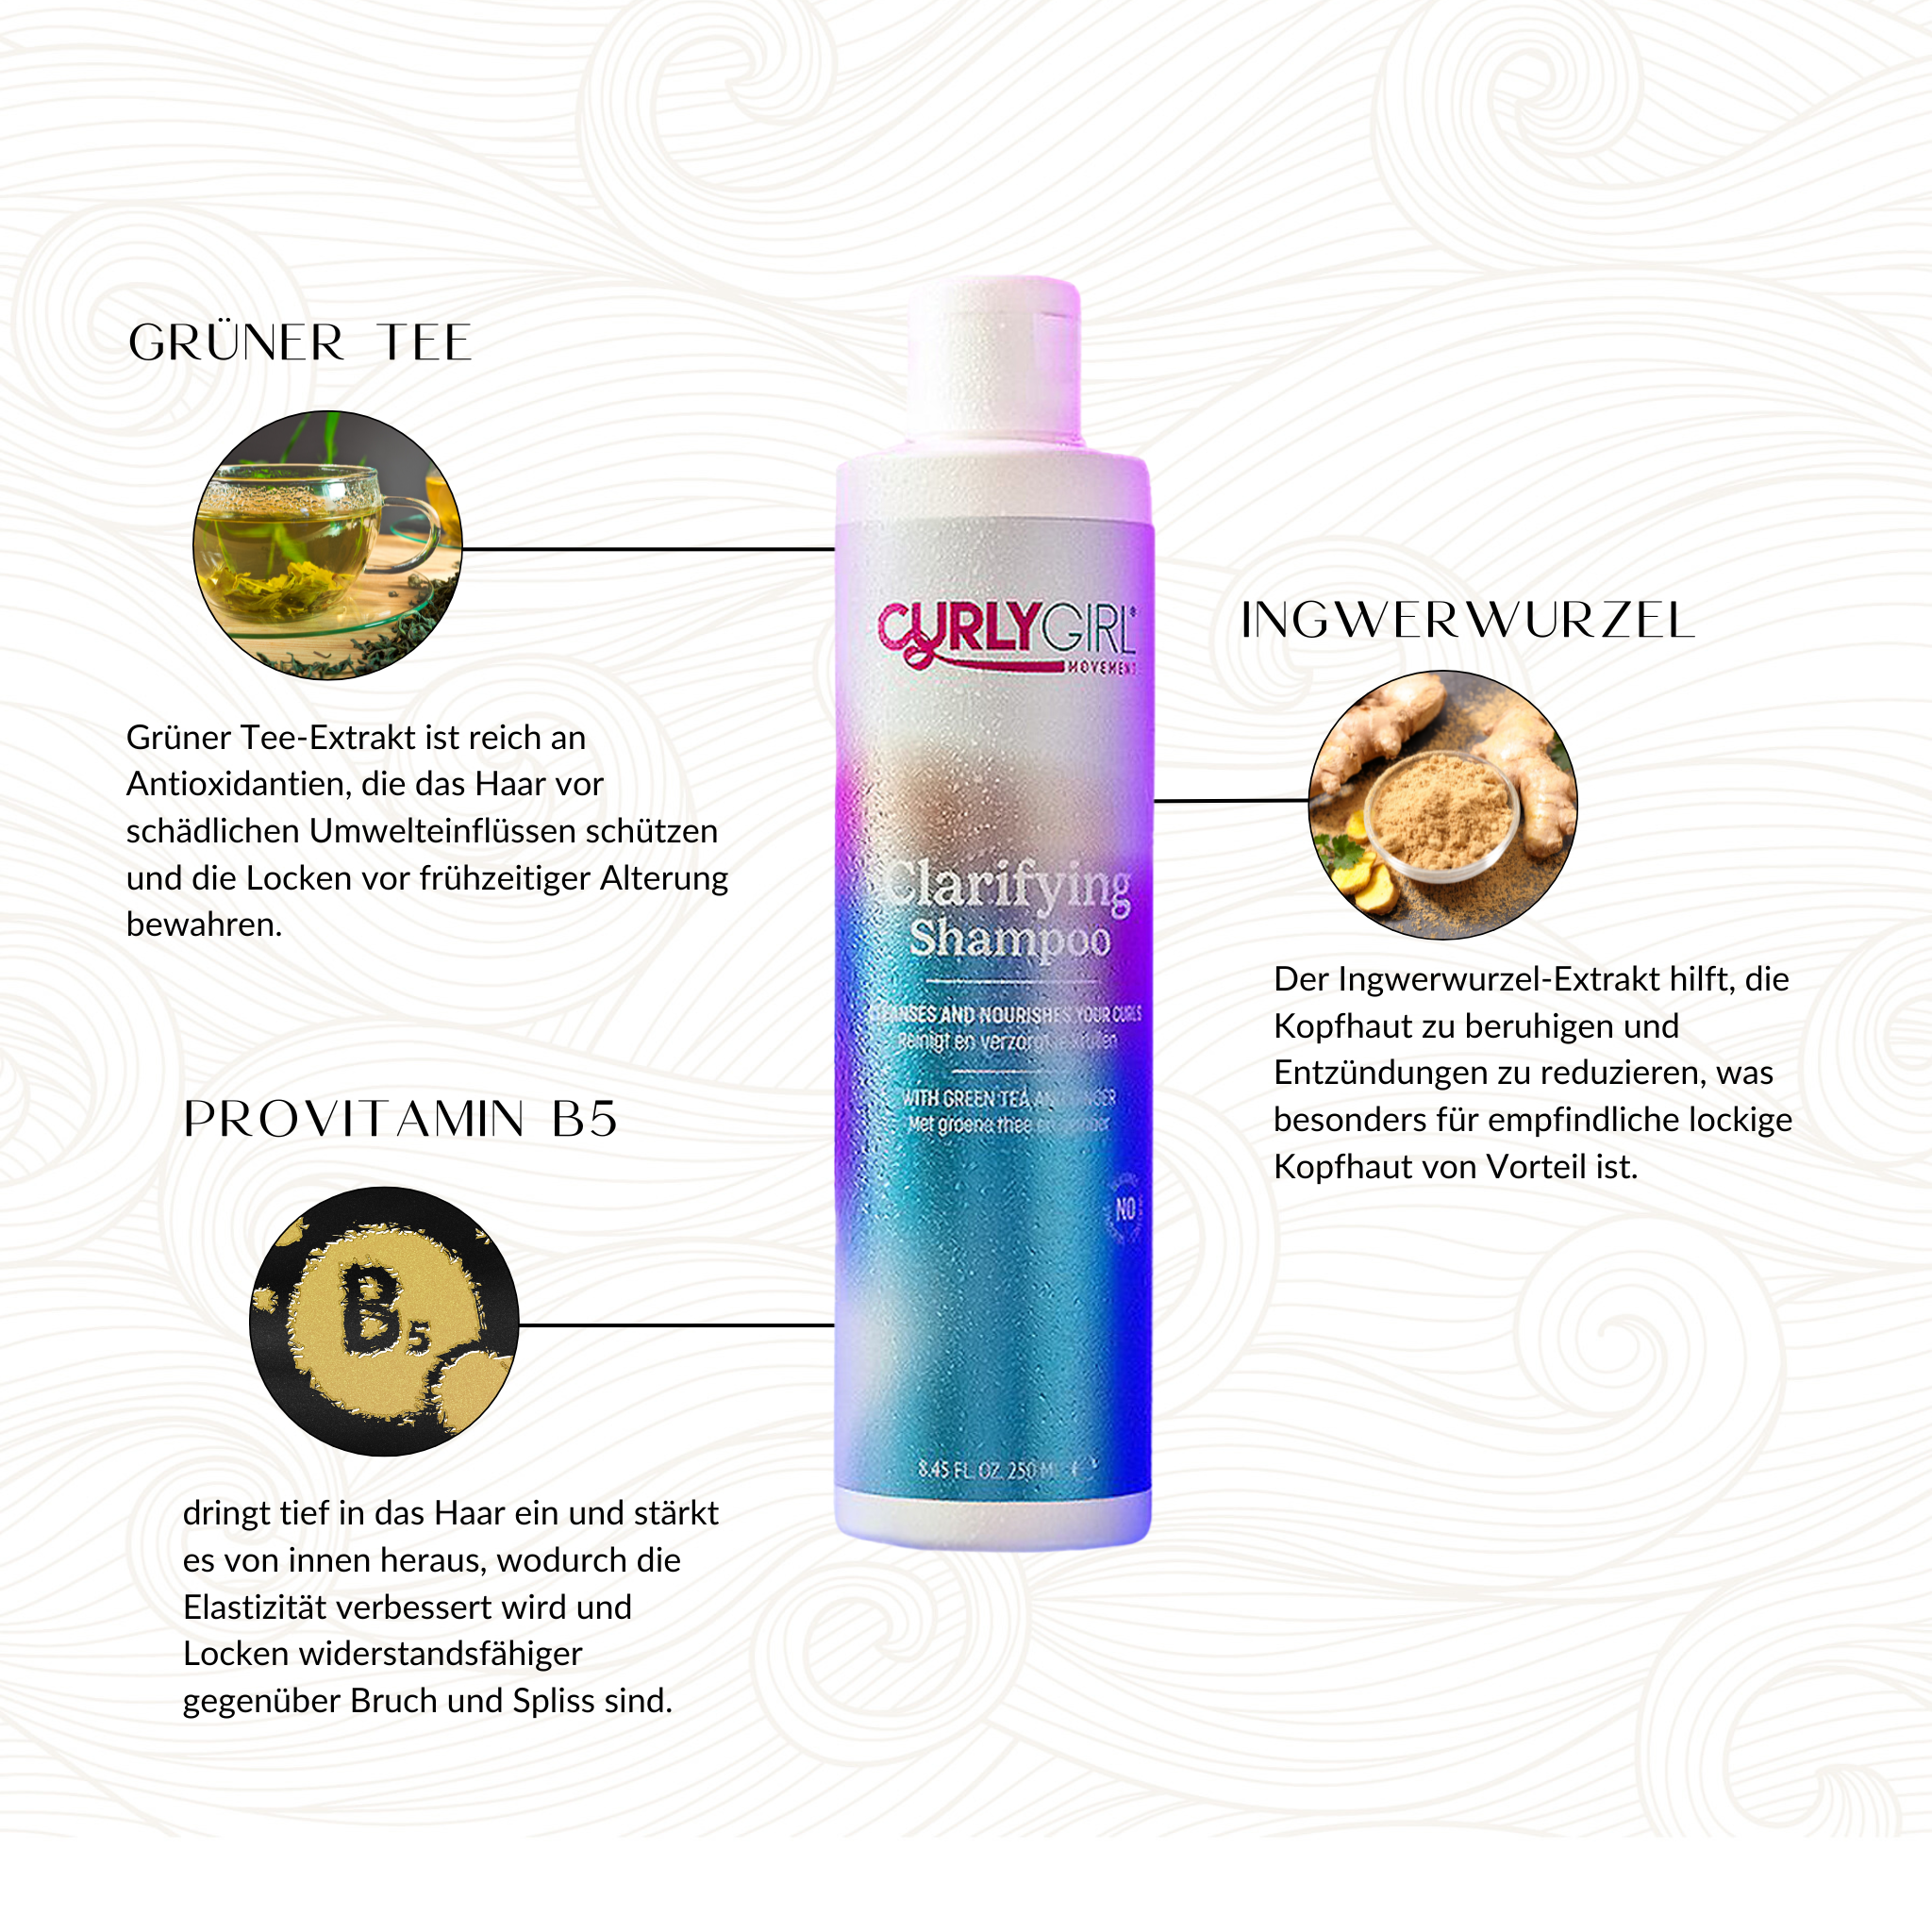 Curlygirl Movement | Clarifying Shampoo /250ml